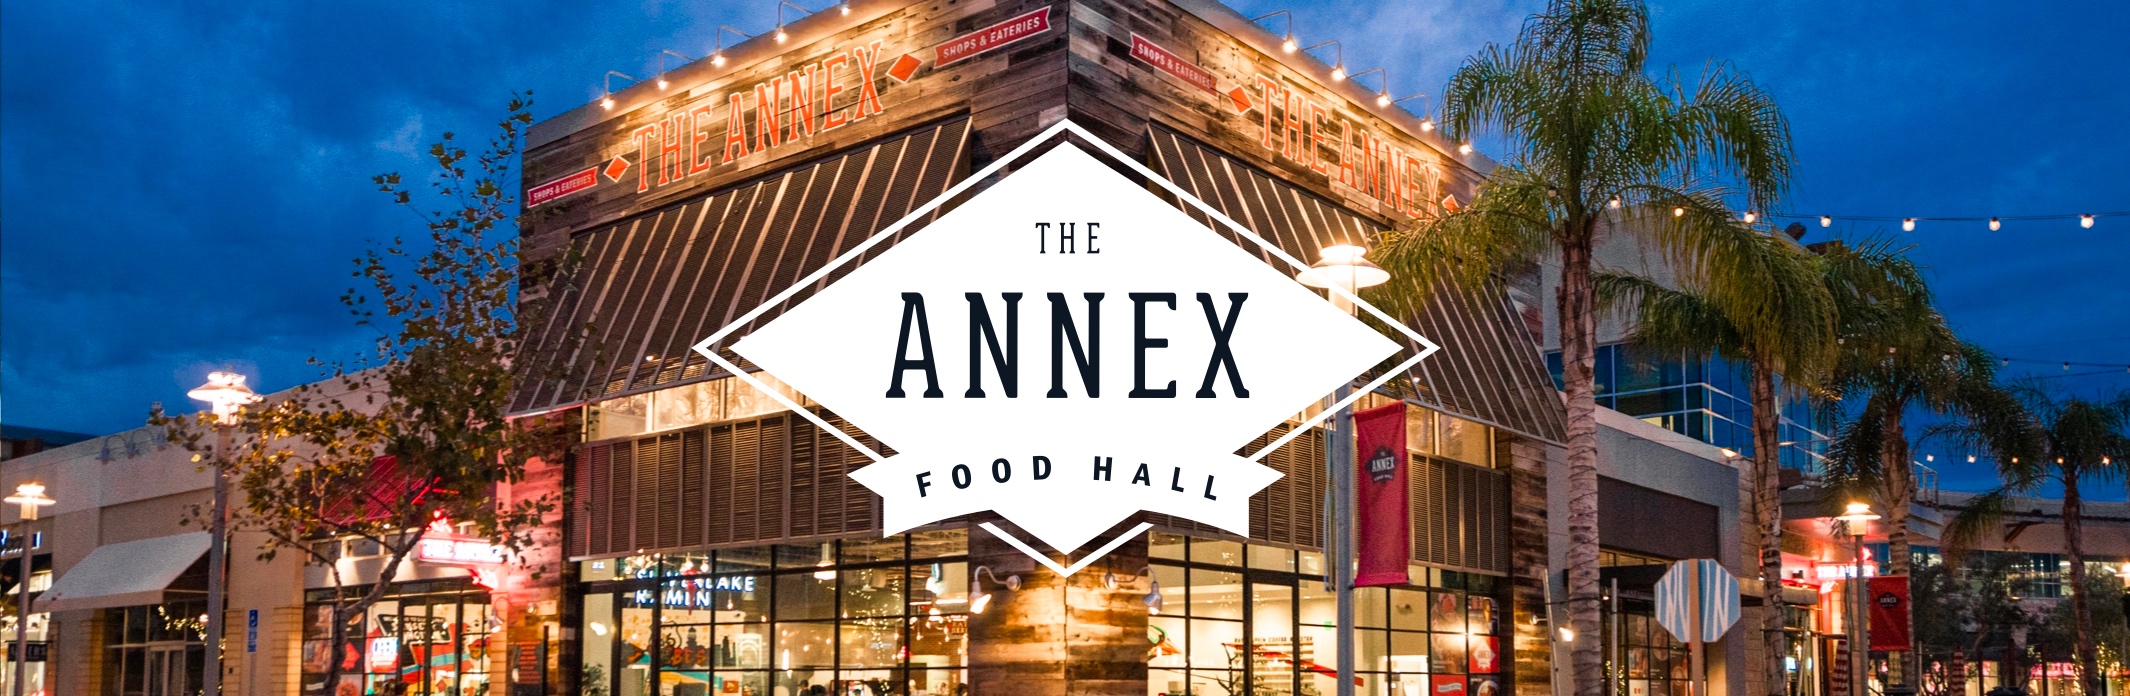 The Annex Food Hall